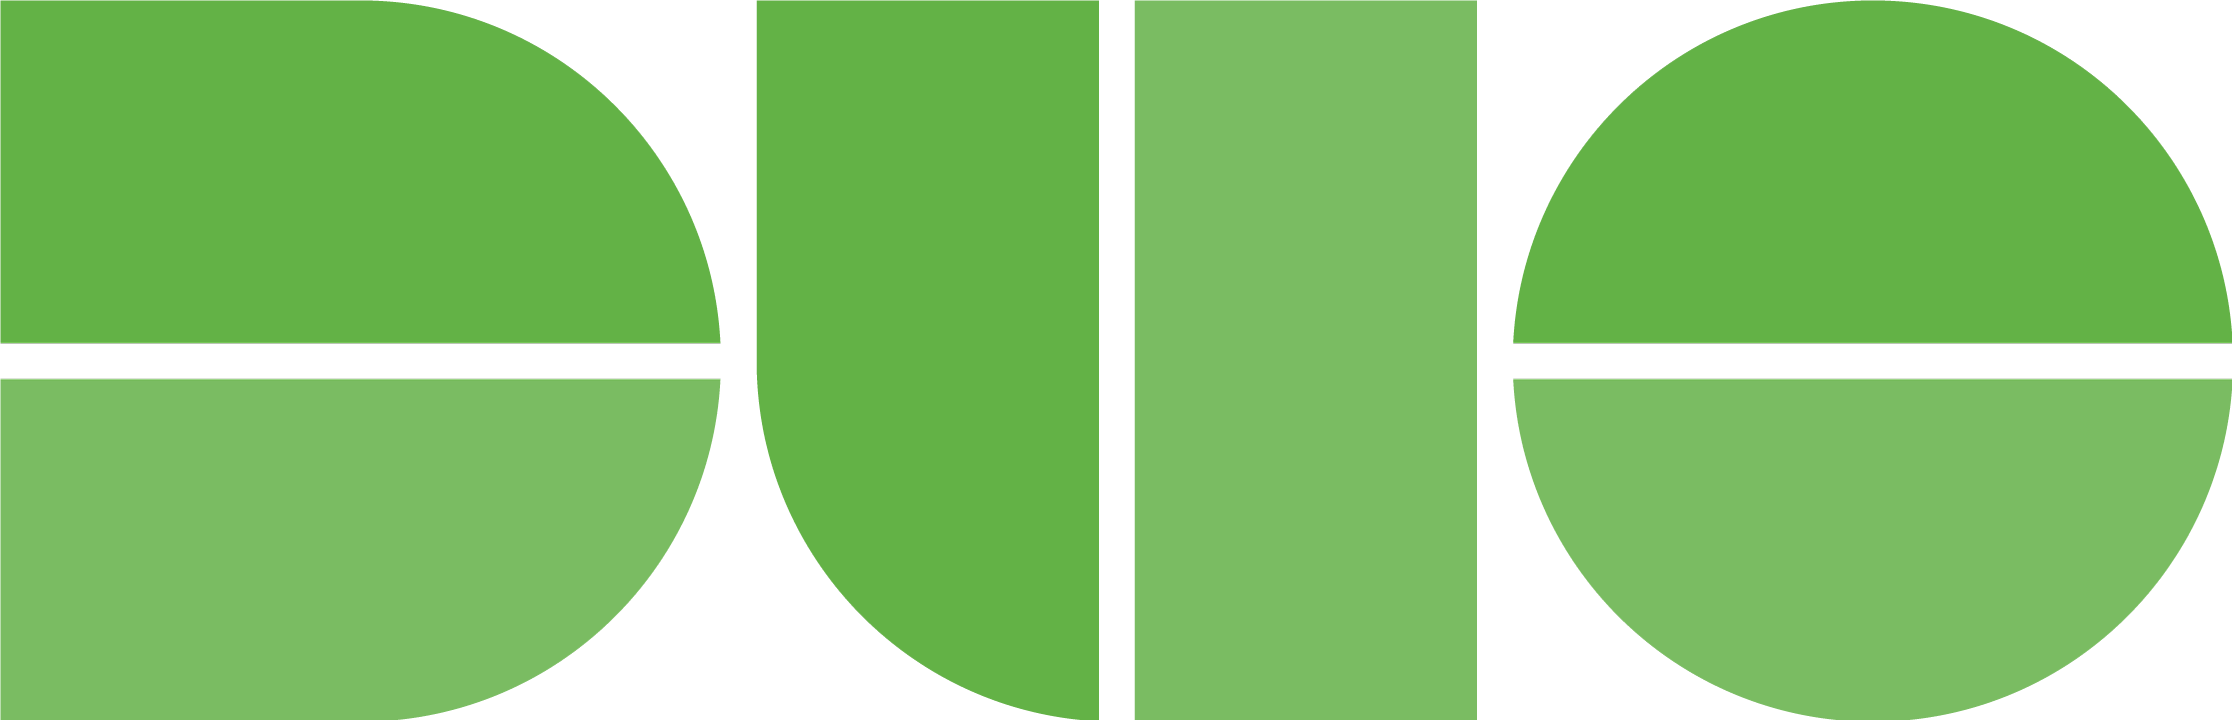 Duo logo, click to start self enrollment